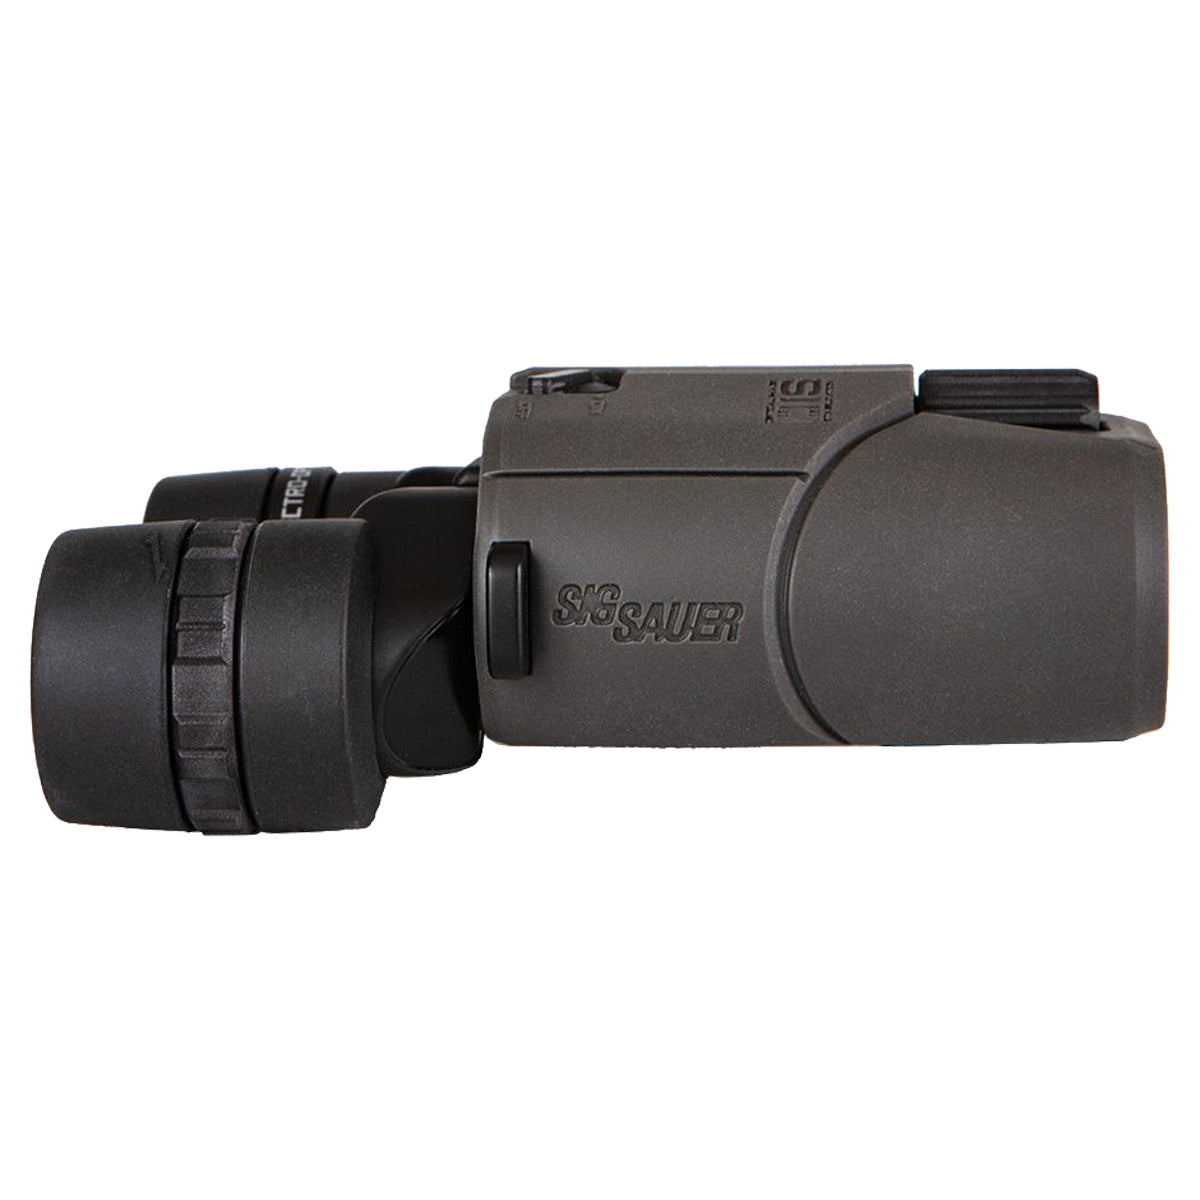 Sig Sauer ZULU6 16x42mm Image Stabilized Binocular in  by GOHUNT | Sig Sauer - GOHUNT Shop